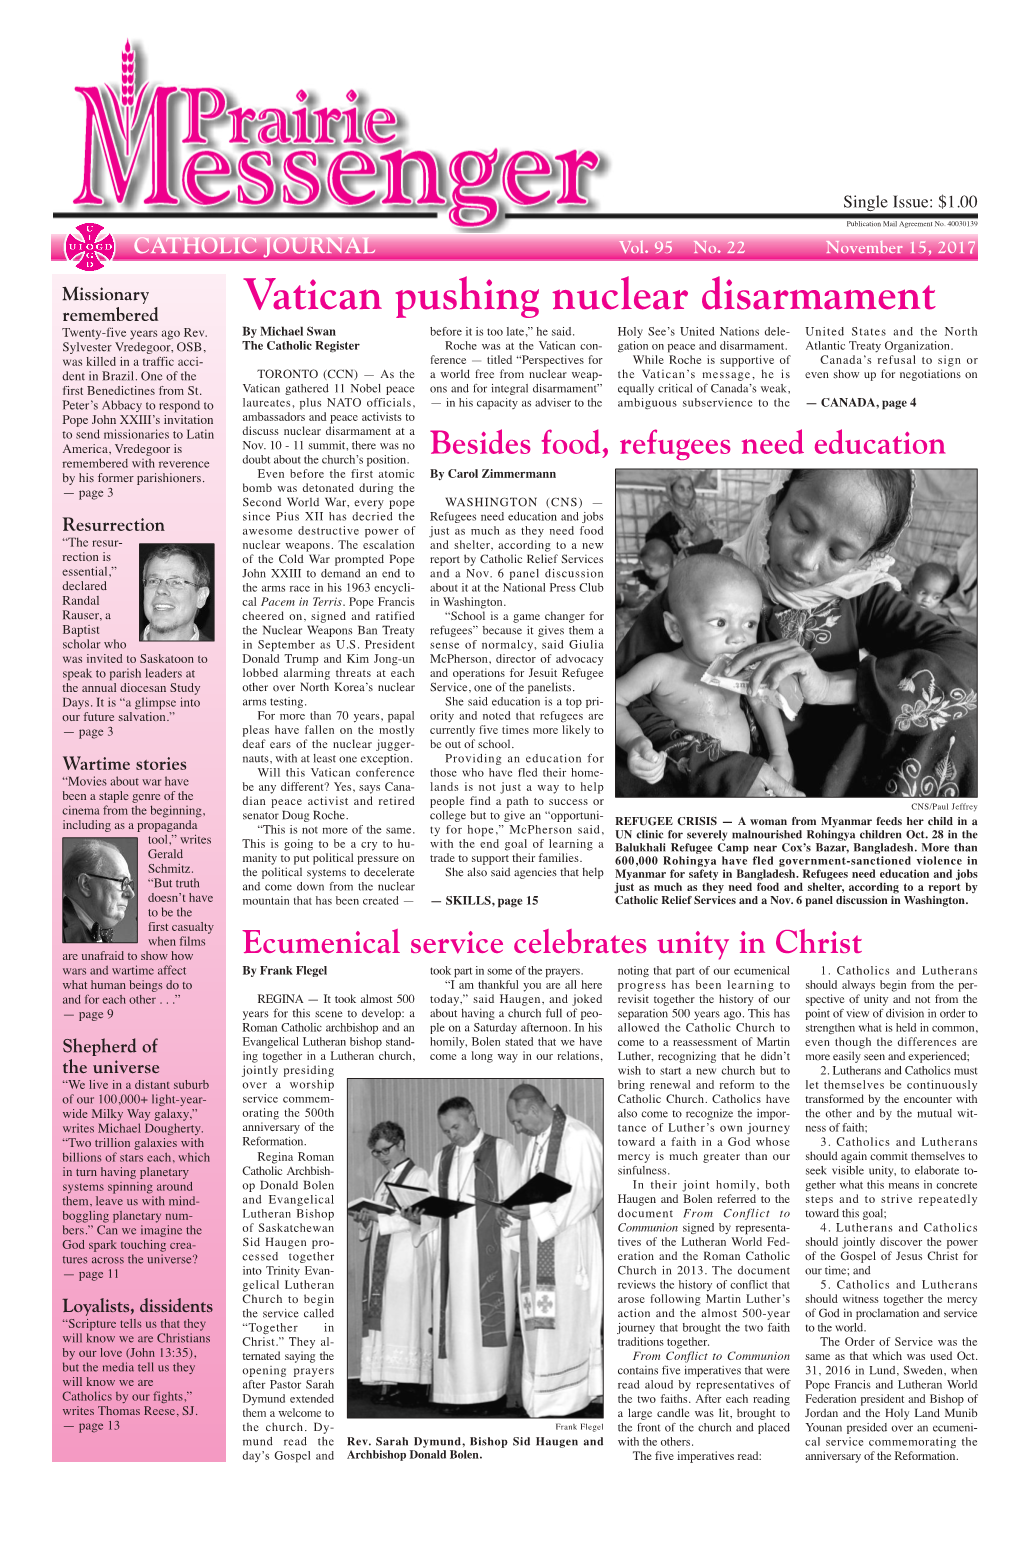 Vatican Pushing Nuclear Disarmament Remembered